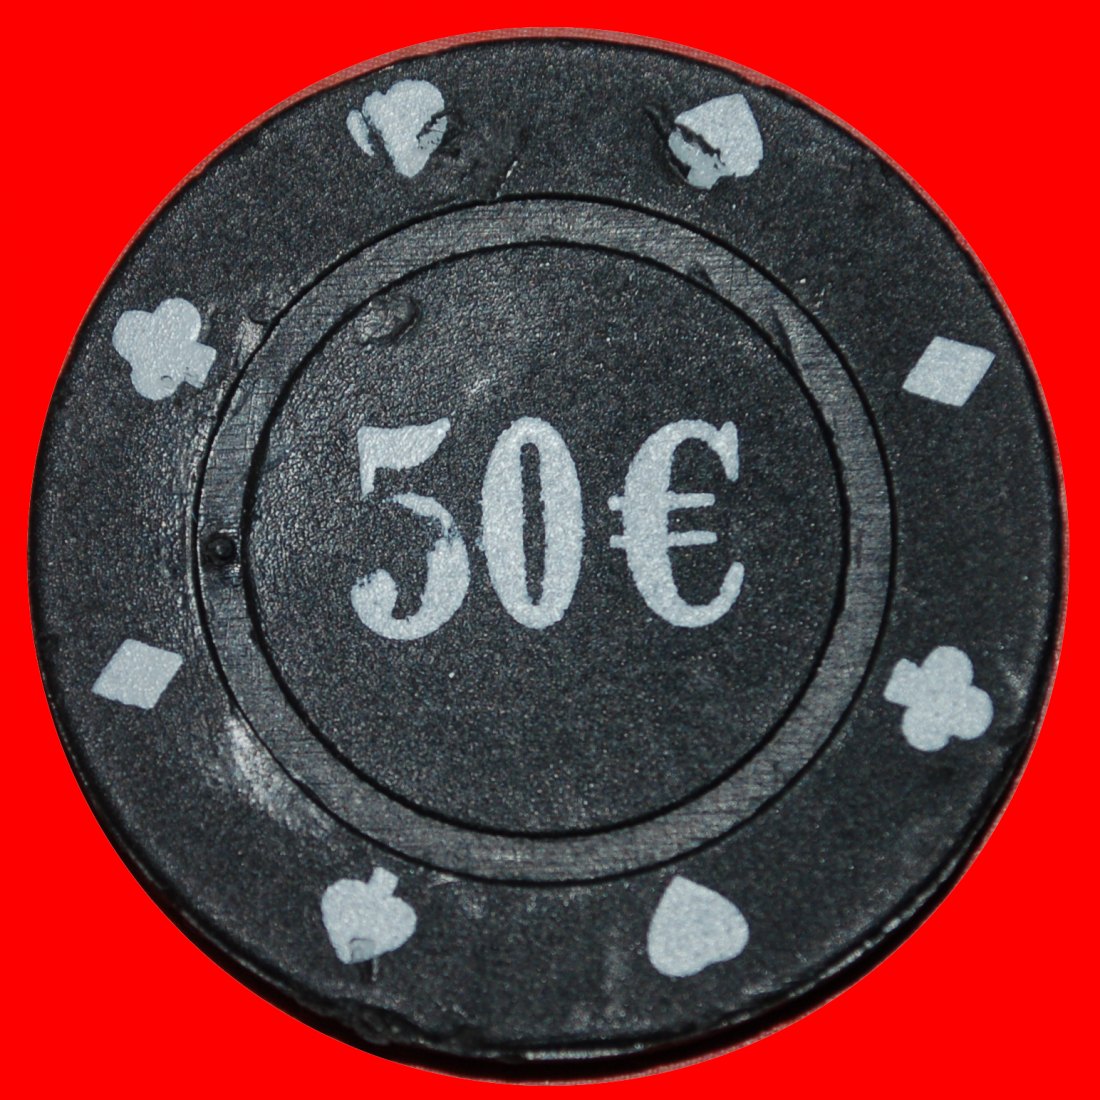  * LARGE DENOMINATION: UNKNOWN CASINO ★ 50 EURO POKER CHIP!★LOW START ★ NO RESERVE!   